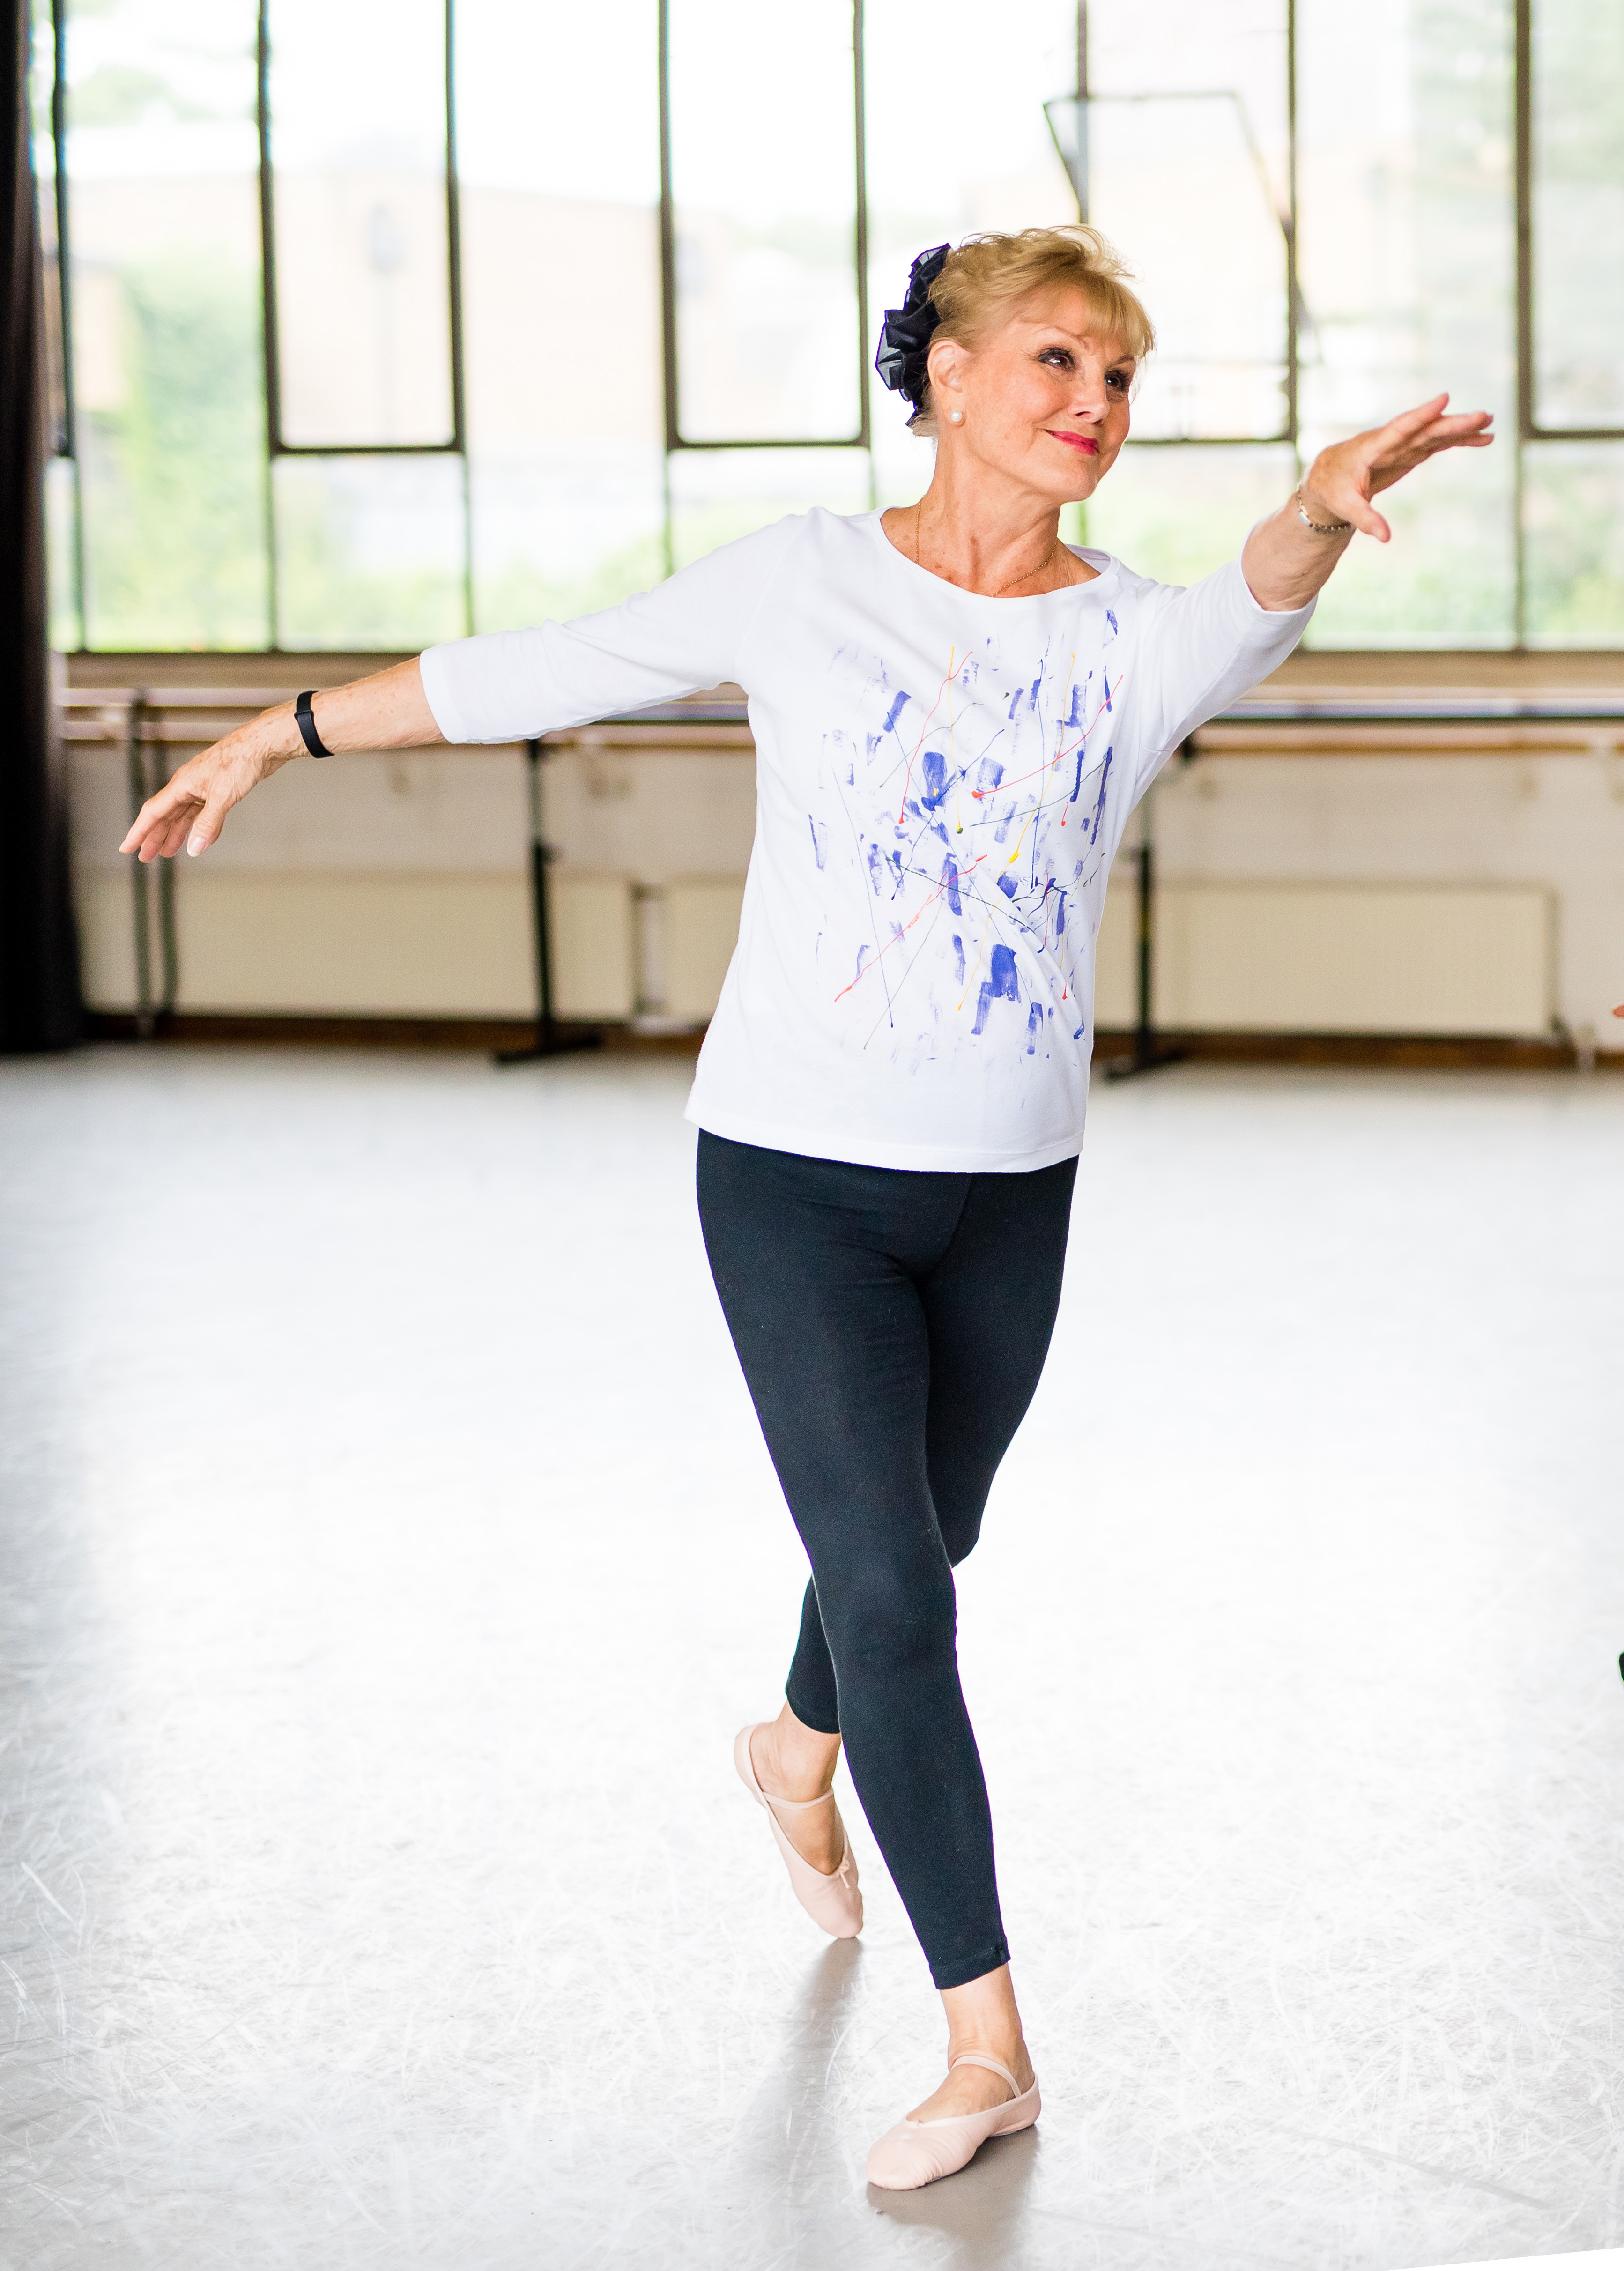 Angela Rippon doing a Silver Swans ballet class (David Tett/Royal Academy of Dance/PA)